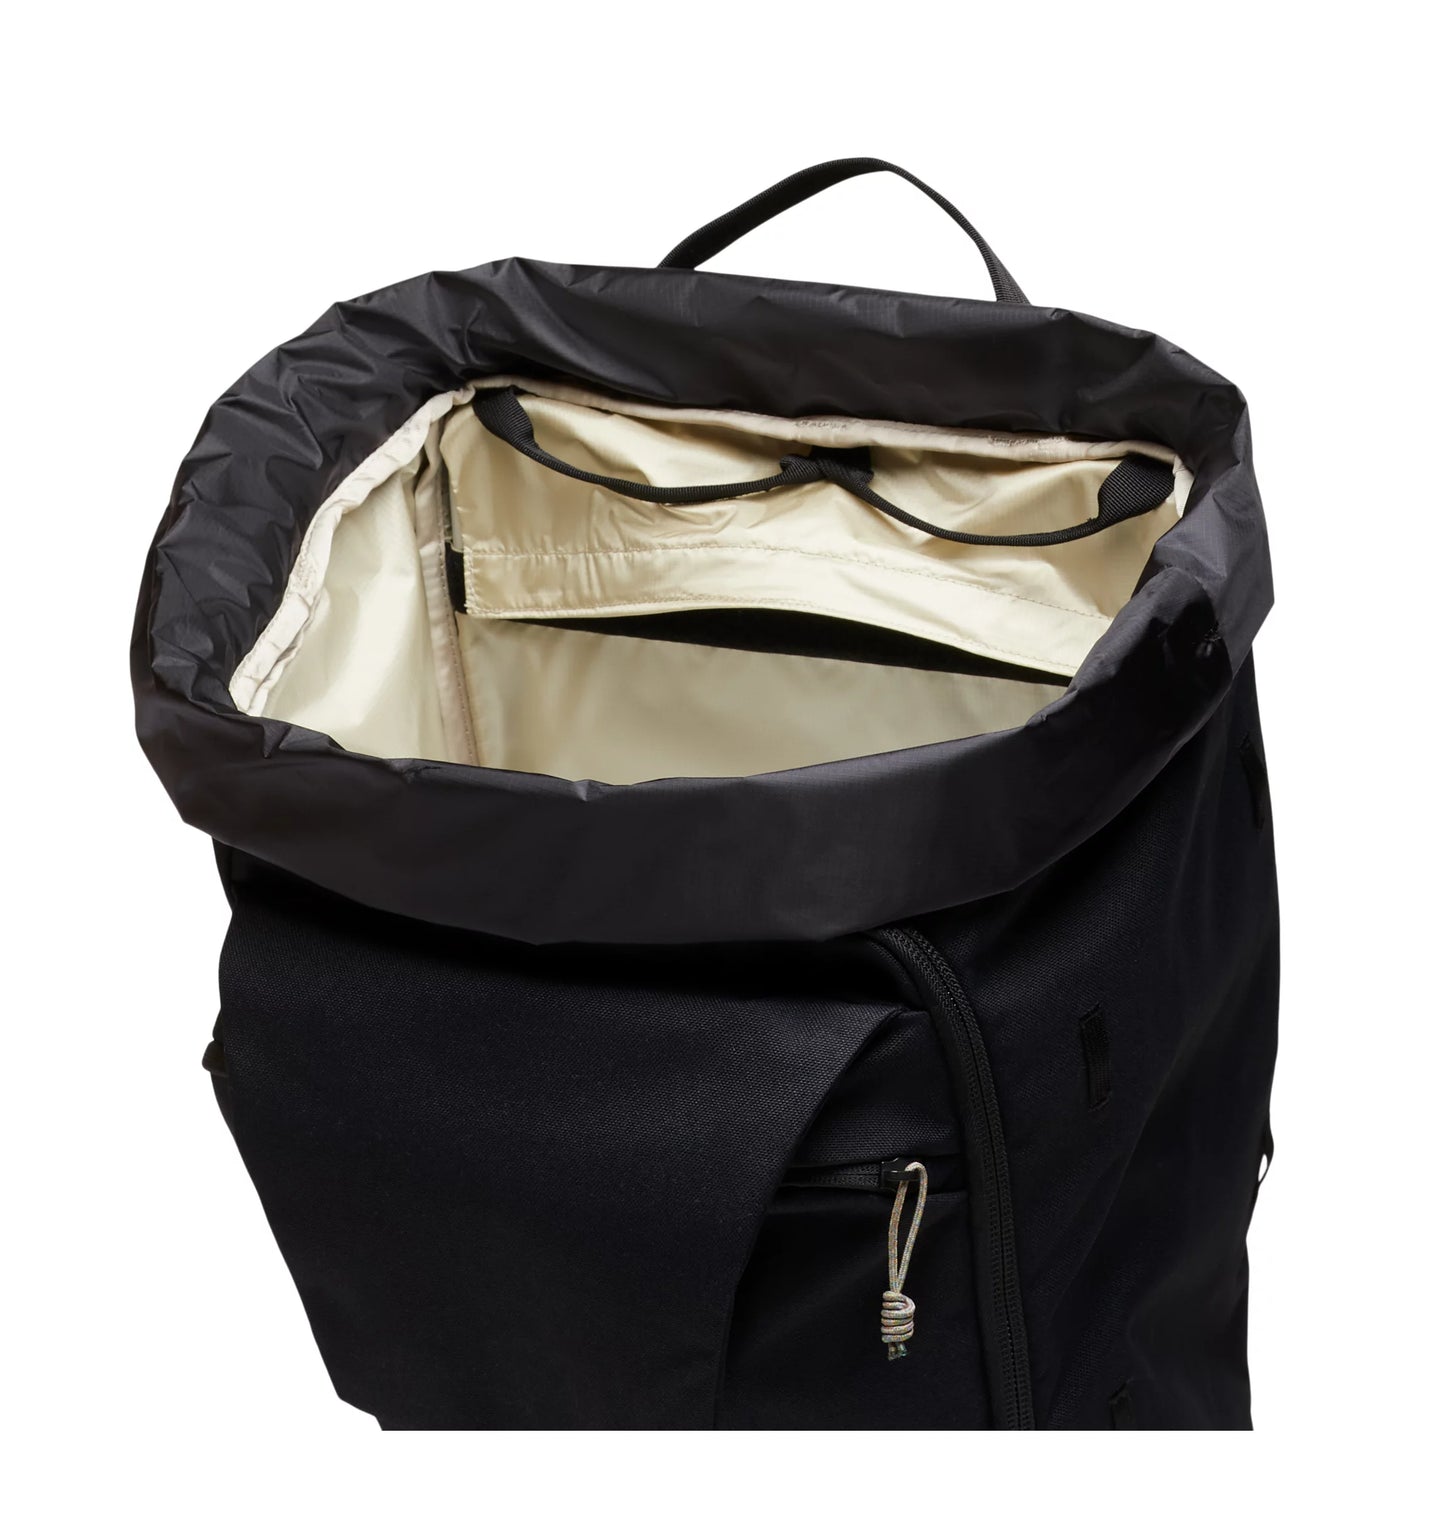 Mountain Hardwear Crag Wagon™ 60L Backpack